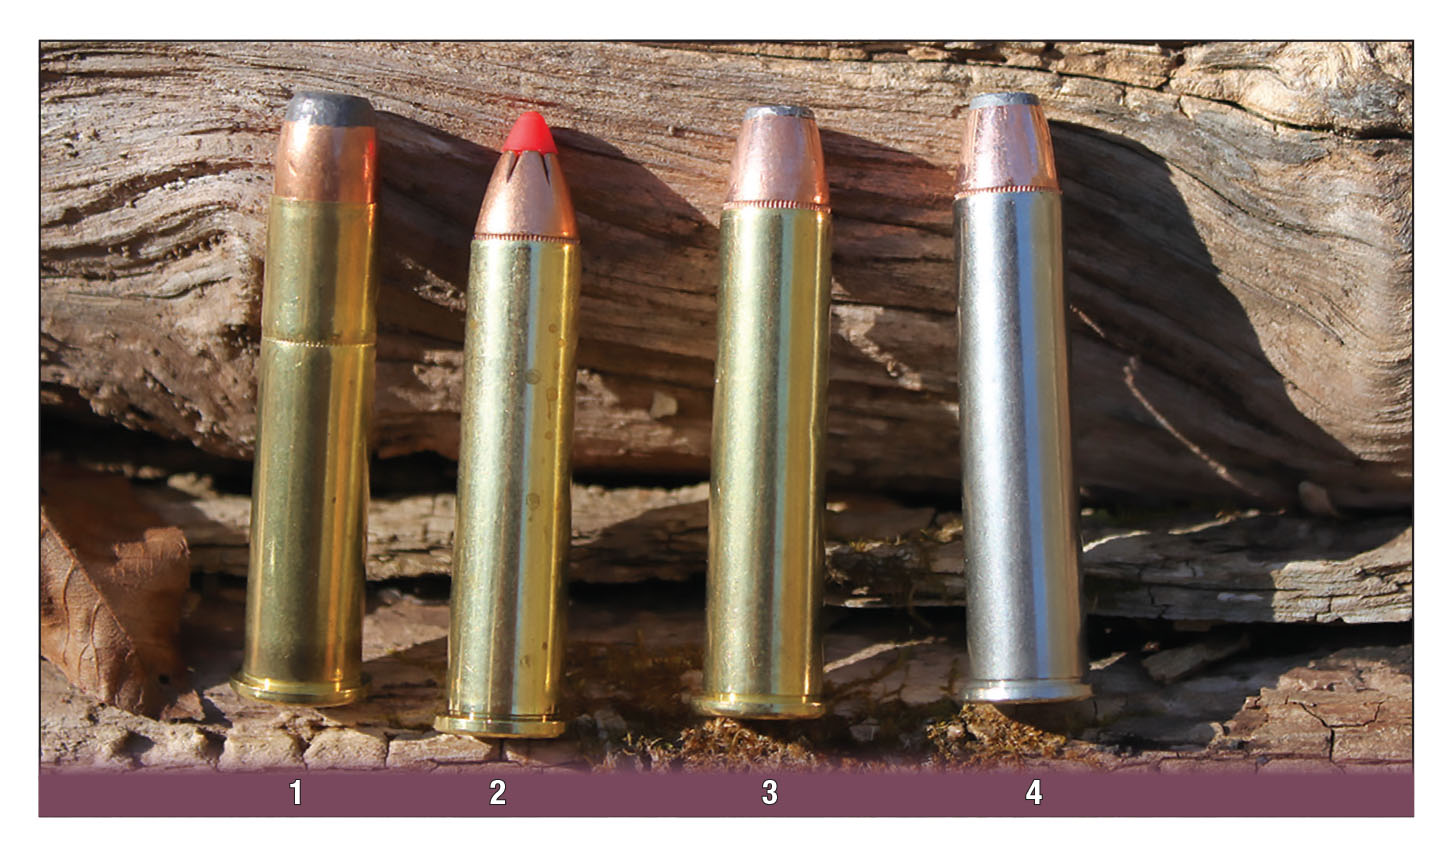 The four types of ammunition tested were: (1) Remington 405 grain, (2) Hornady LEVERevolution 325 grain, (3) Federal 300 grain and (4) Federal Premium Hammer Down 300 grain.